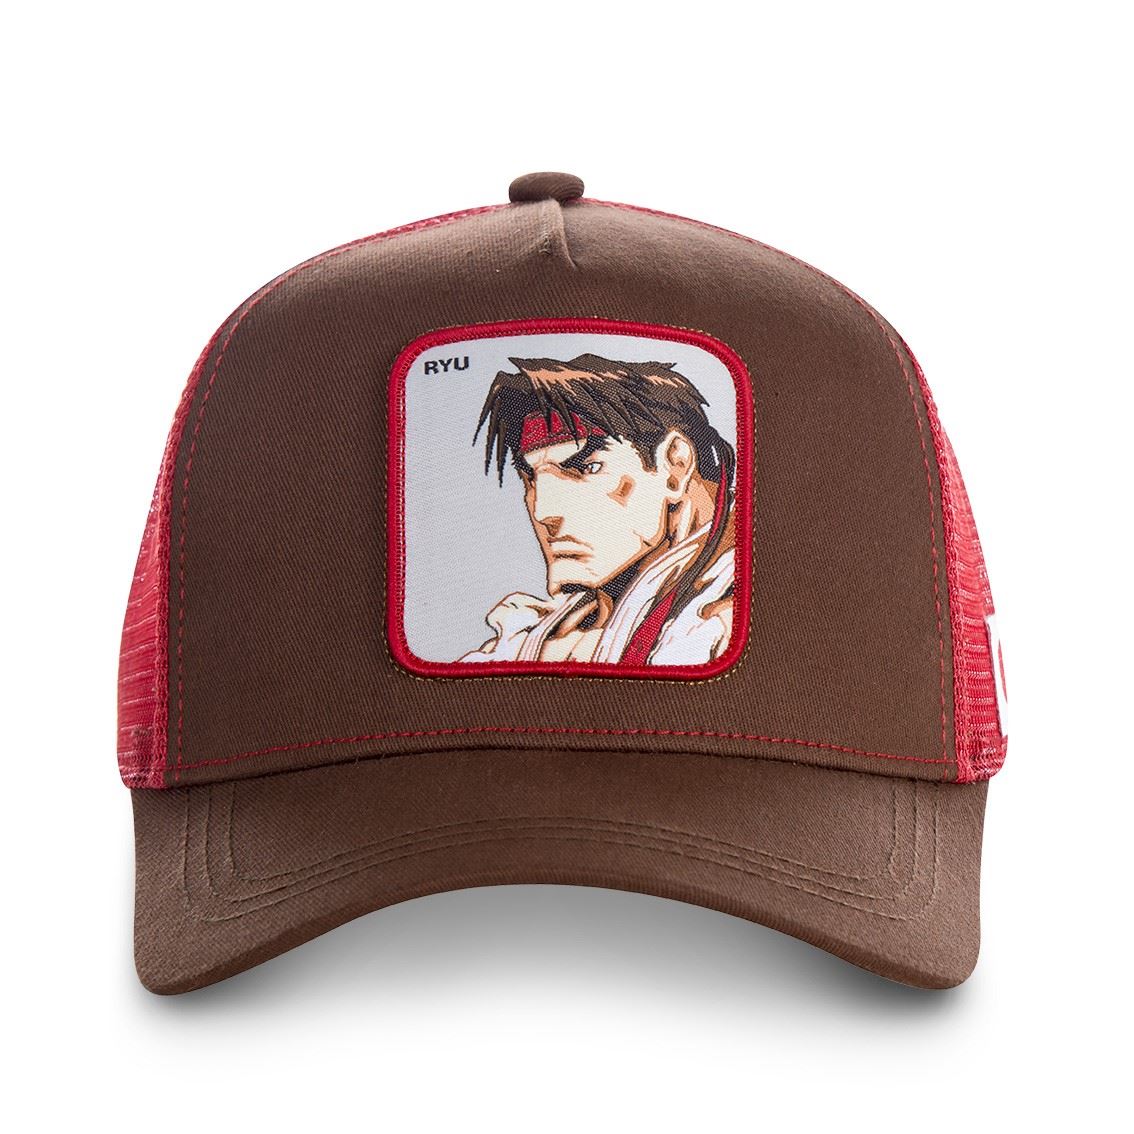 Ryu Street Fighter Trucker Cap Capslab